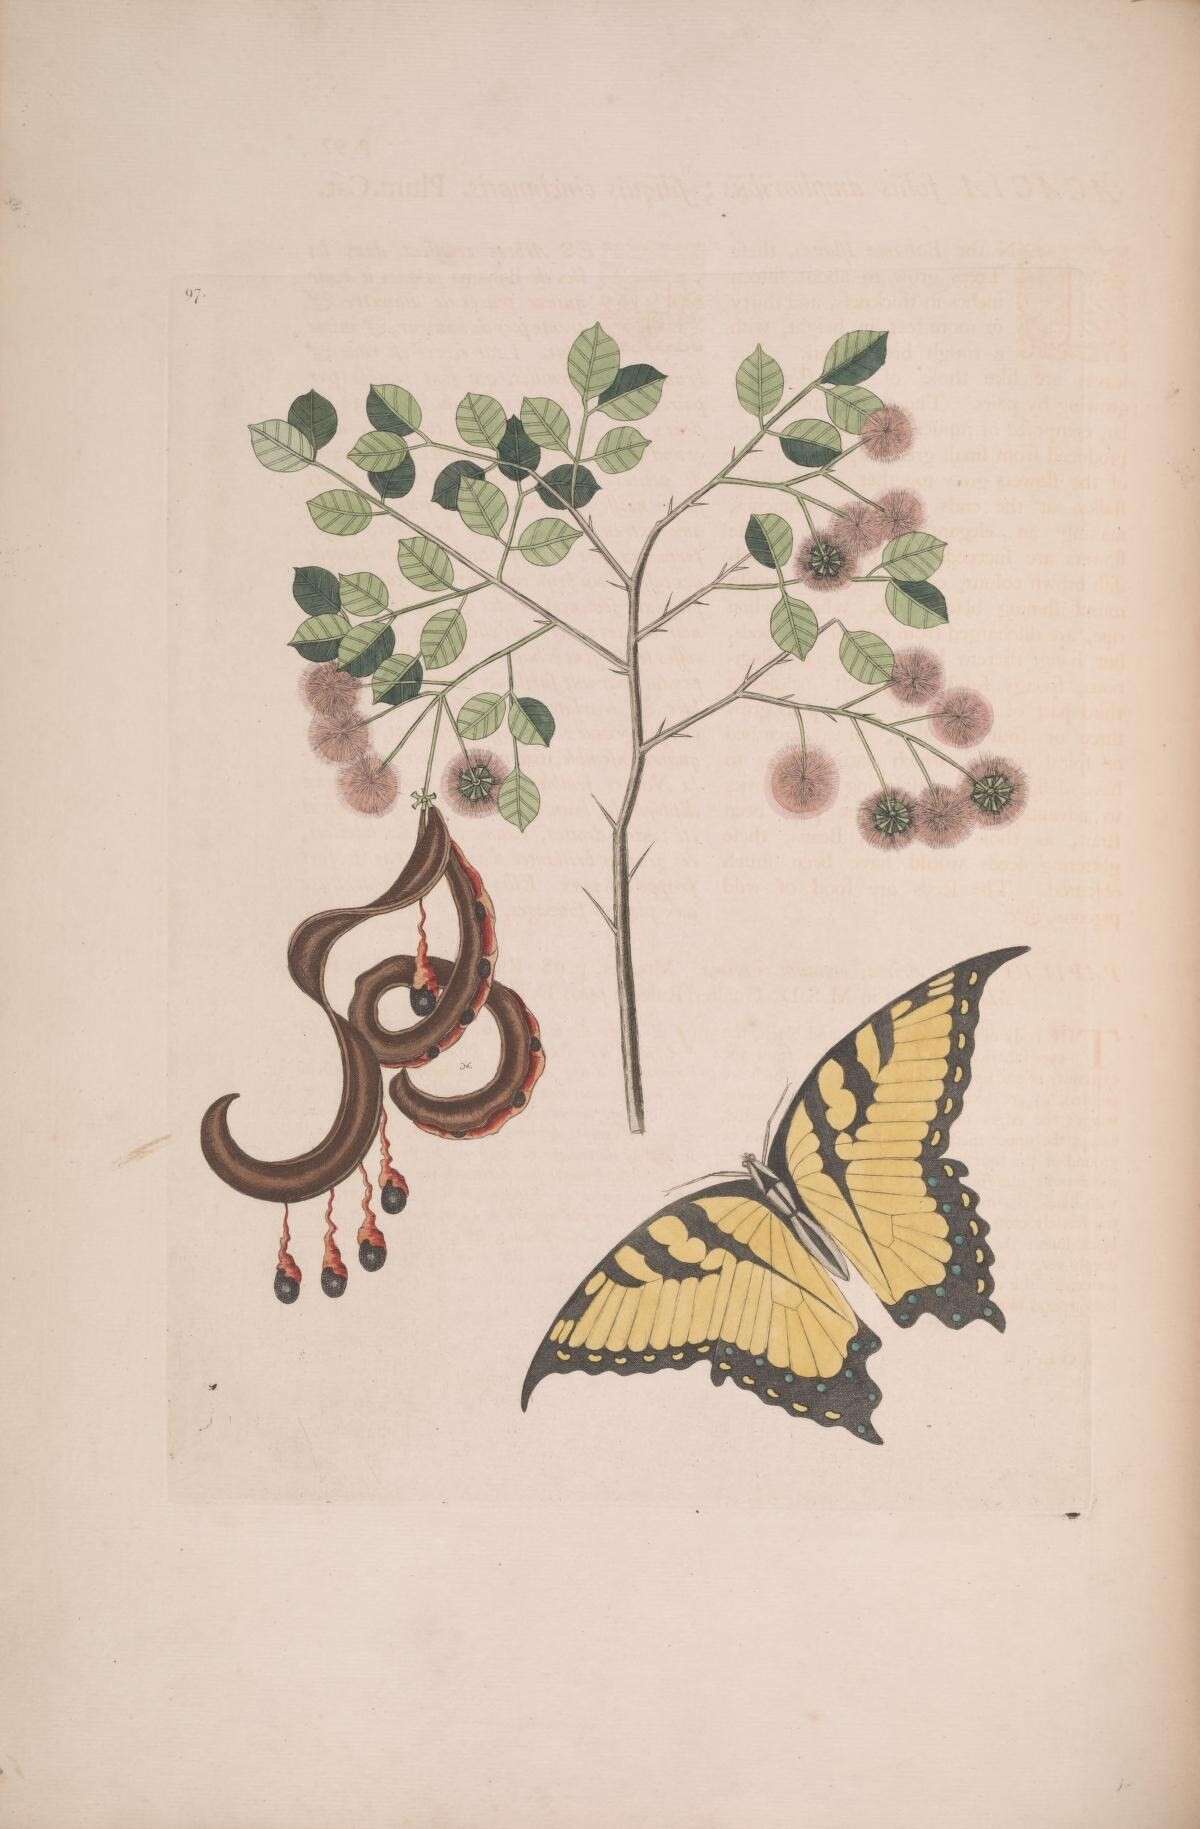 Imagem de Papilio glaucus Linnaeus 1758